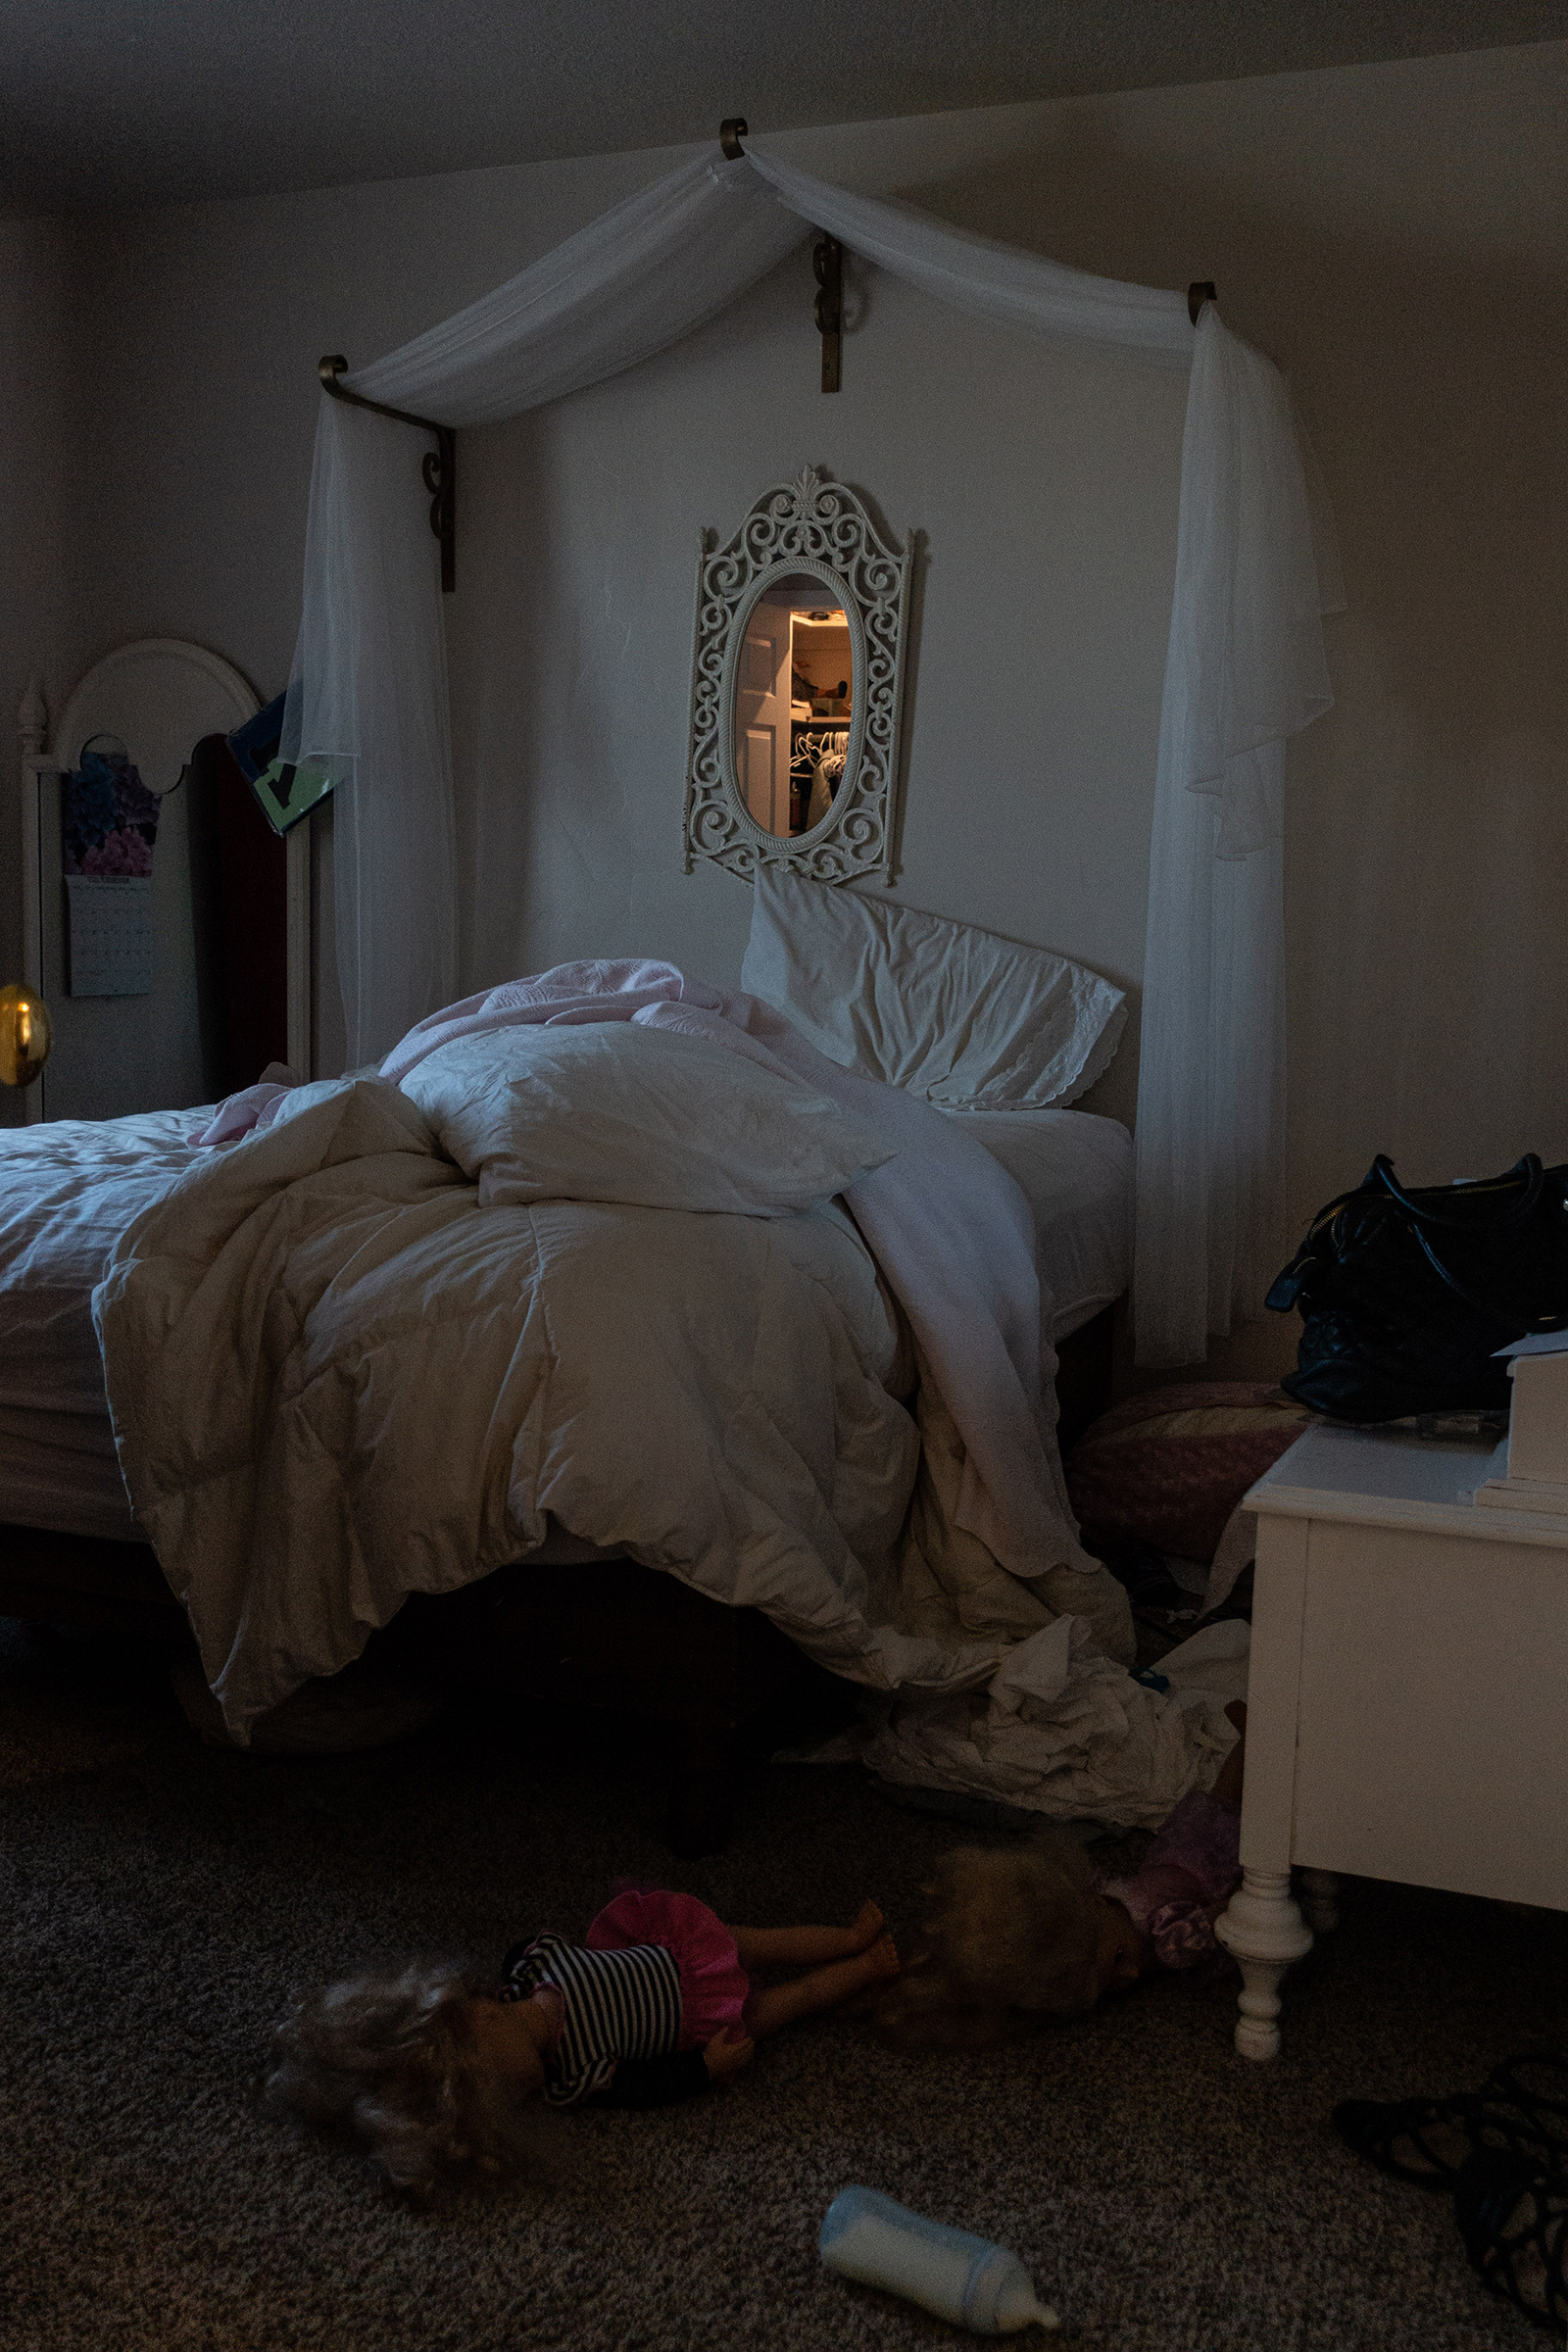 The bedroom of Krystal Miller, one of six children killed in the Nov. 4 attack.